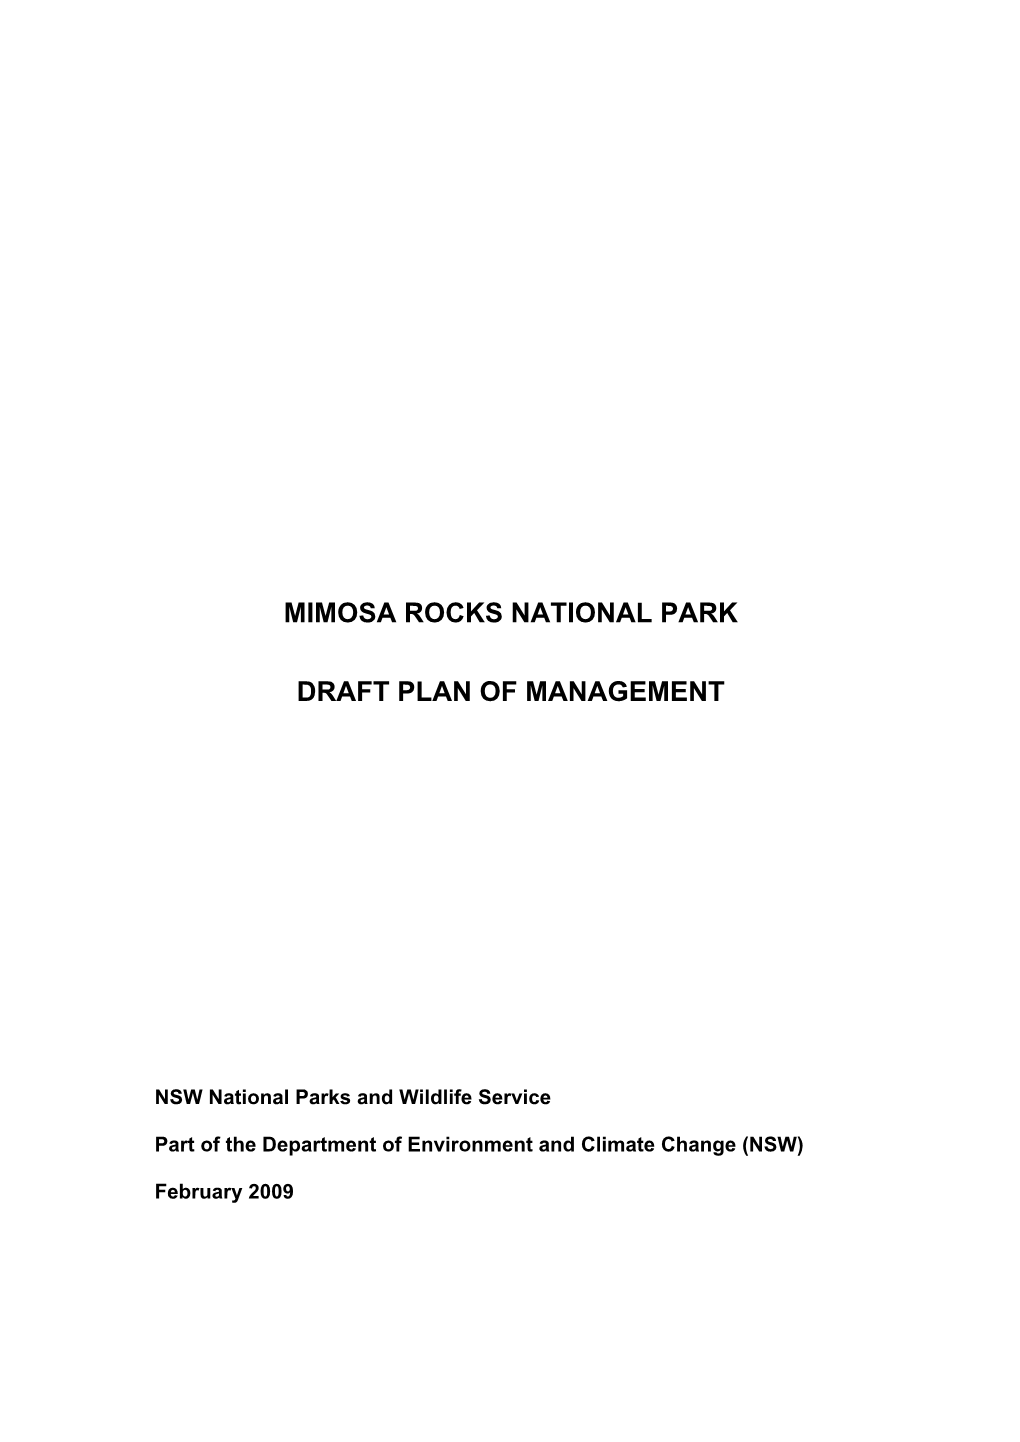 Mimosa Rocks National Park Draft Plan of Management